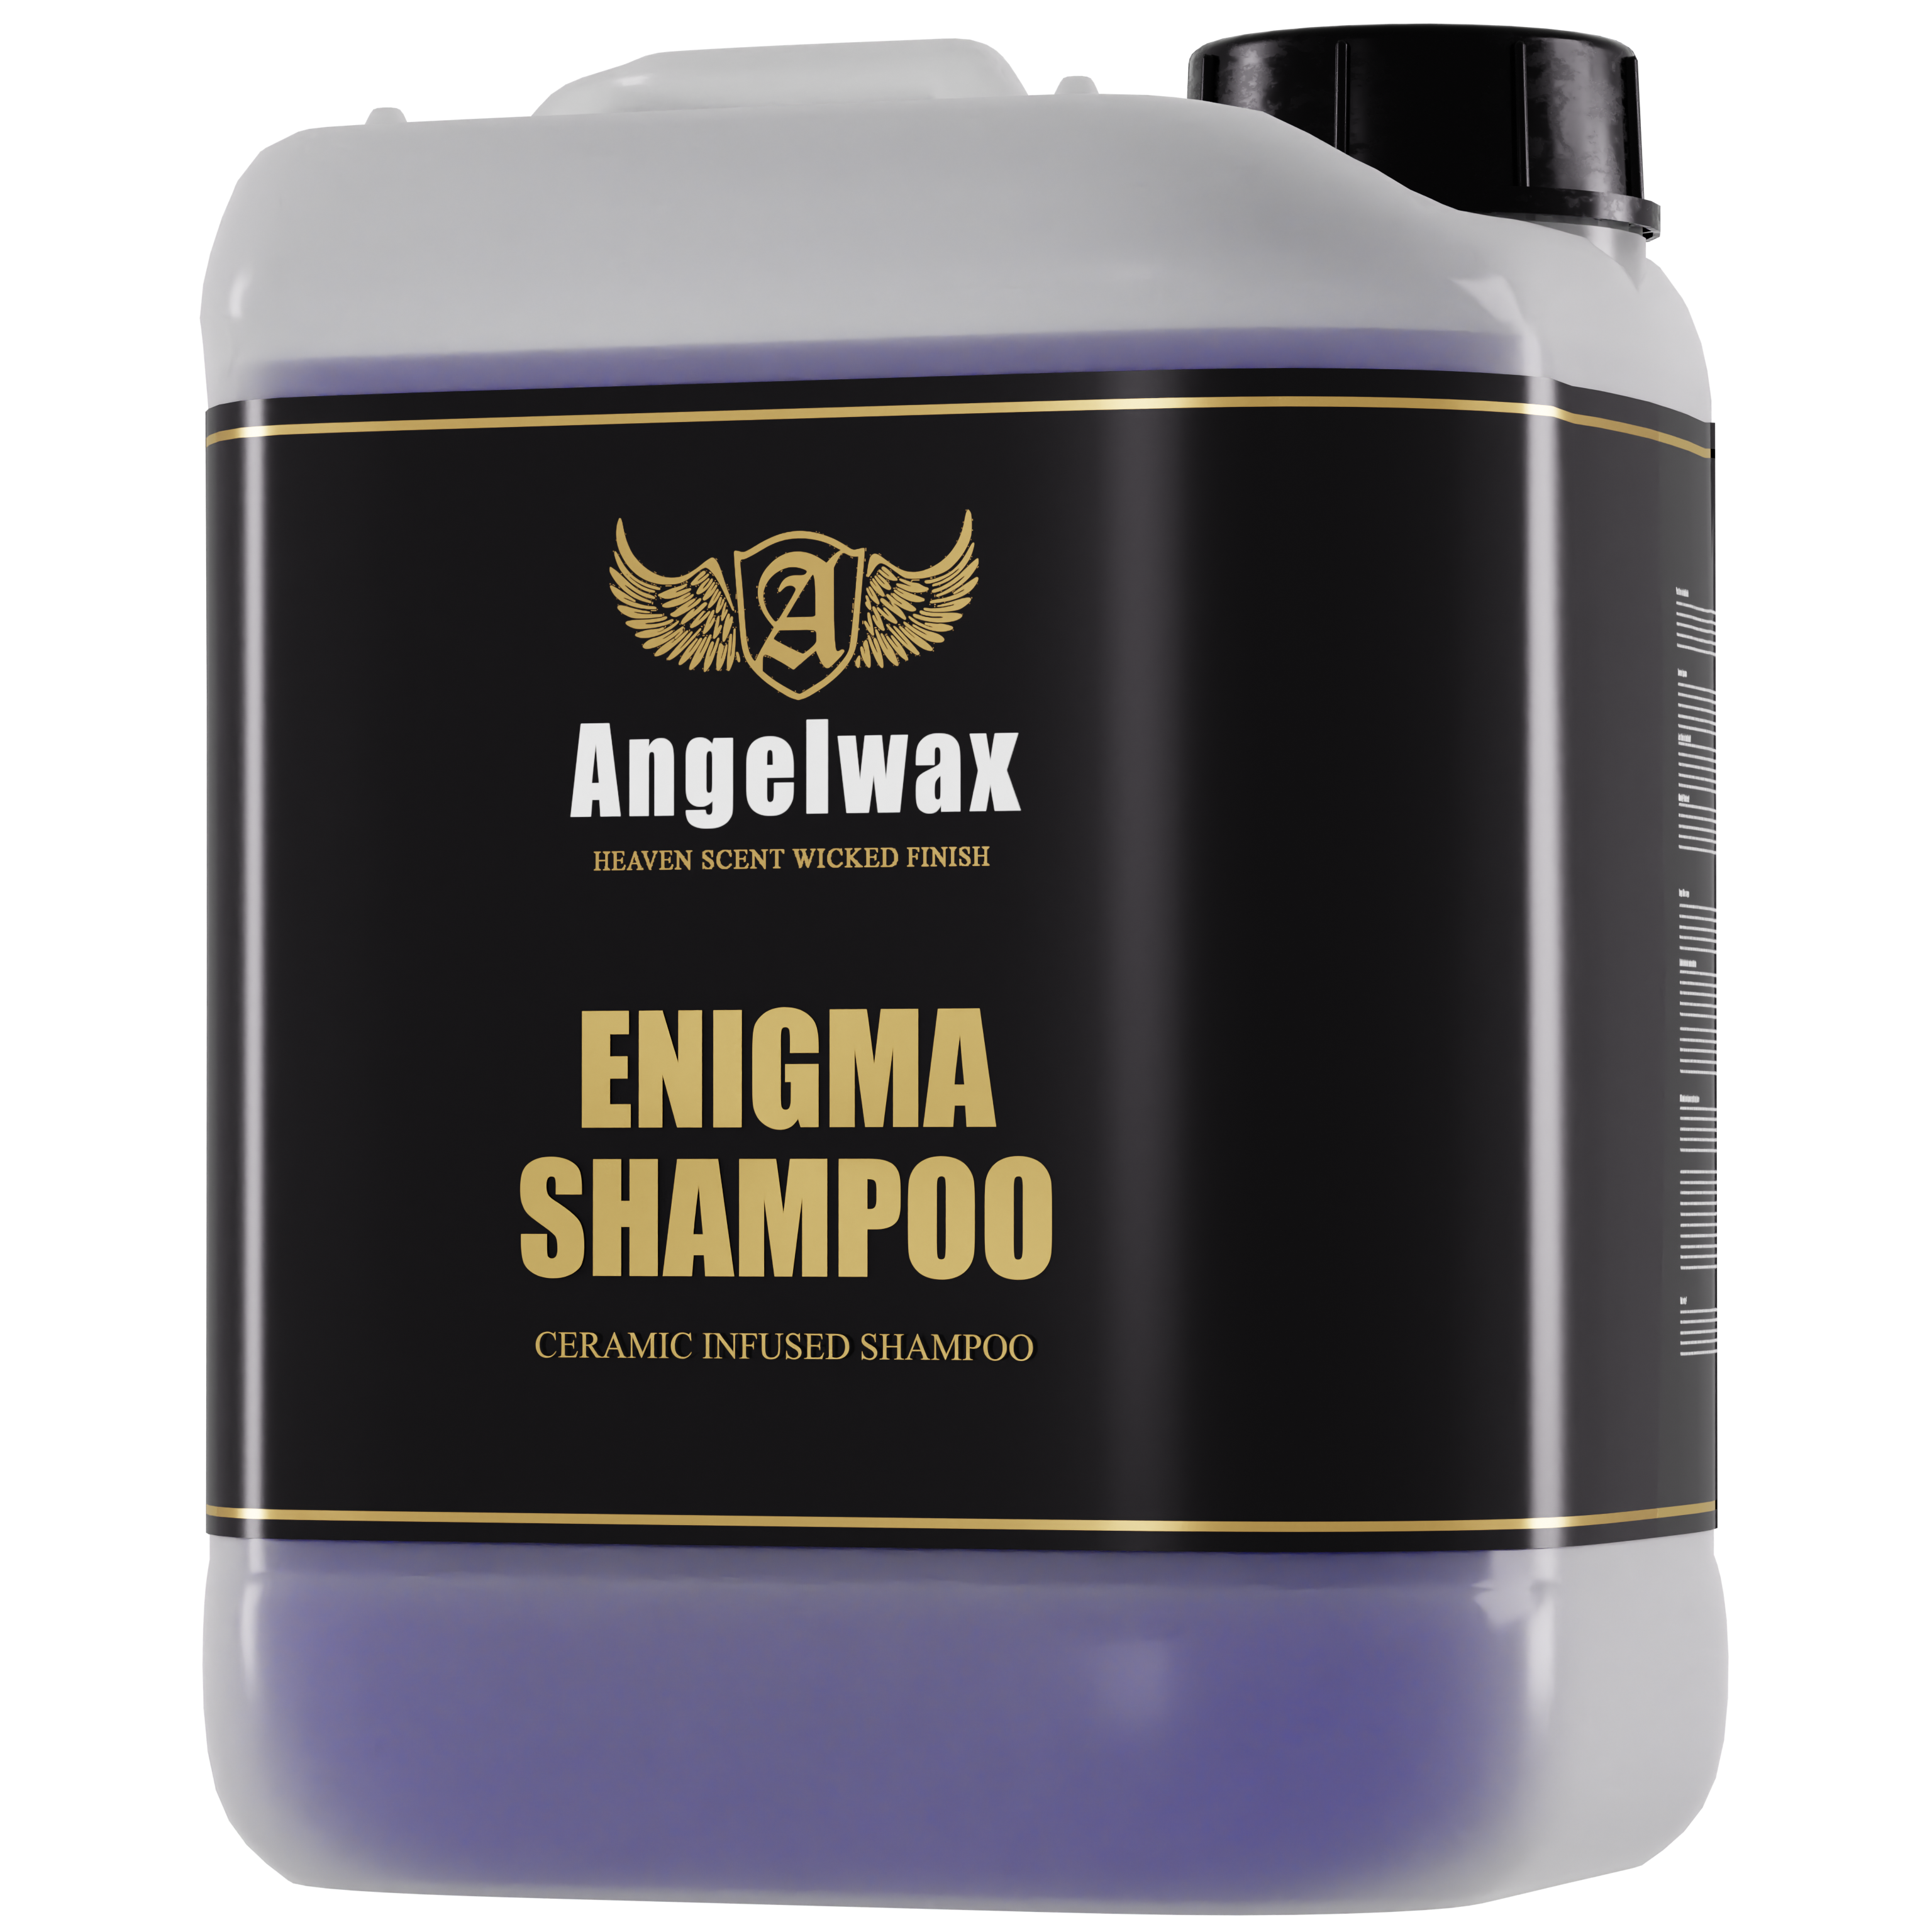 Angelwax Enigma Shampoo | Ceramic Infused Shampoo - Parks Car Care 